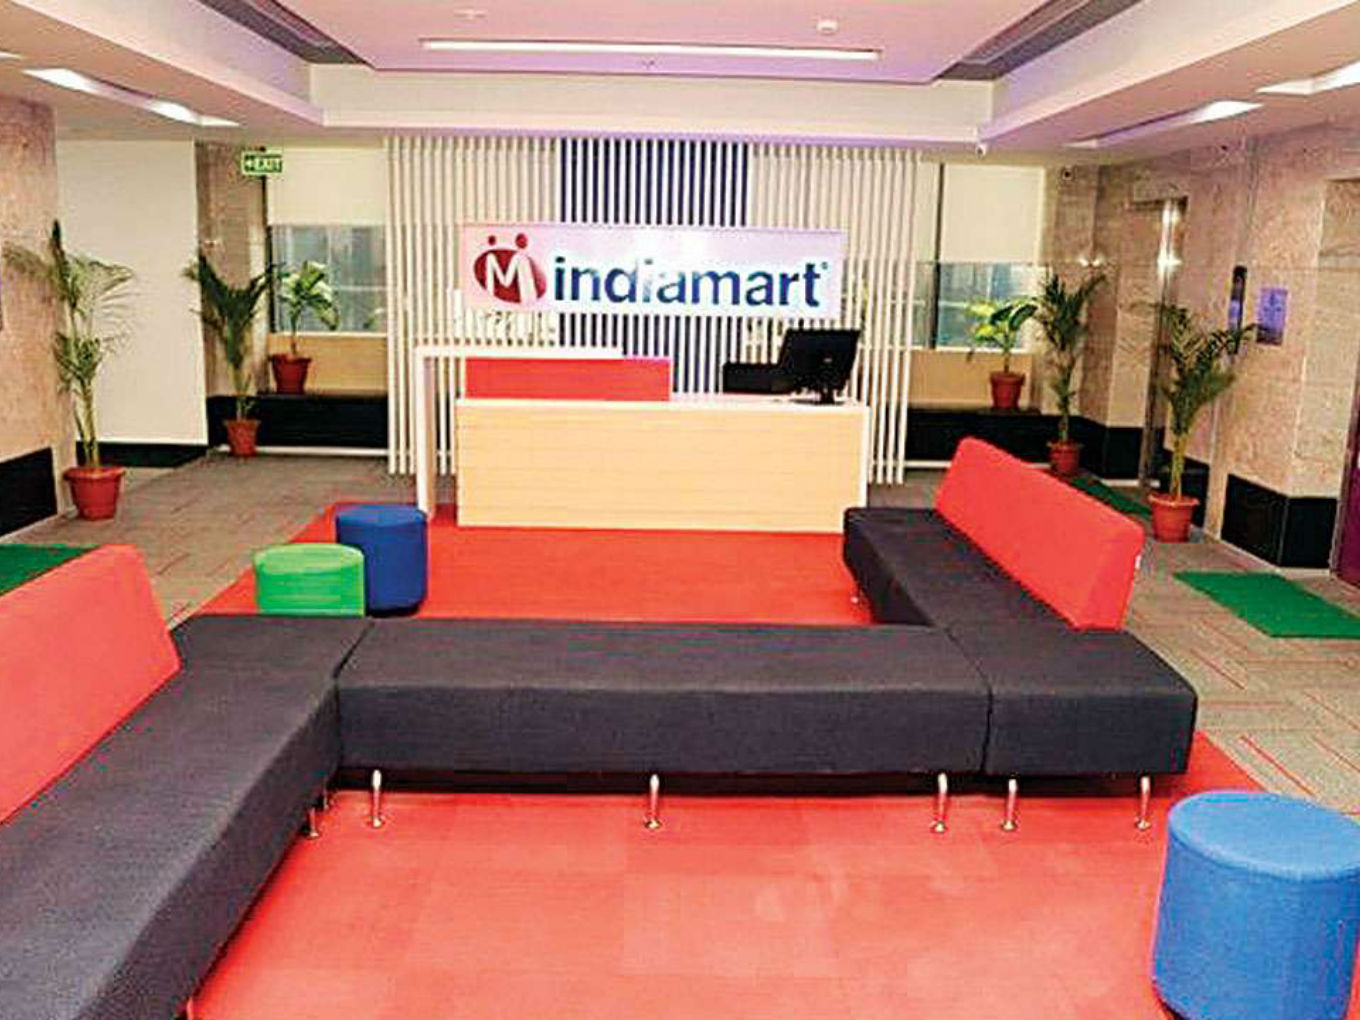 IndiaMART Probing Reports Of Data Leak Impacting 40K Vendors